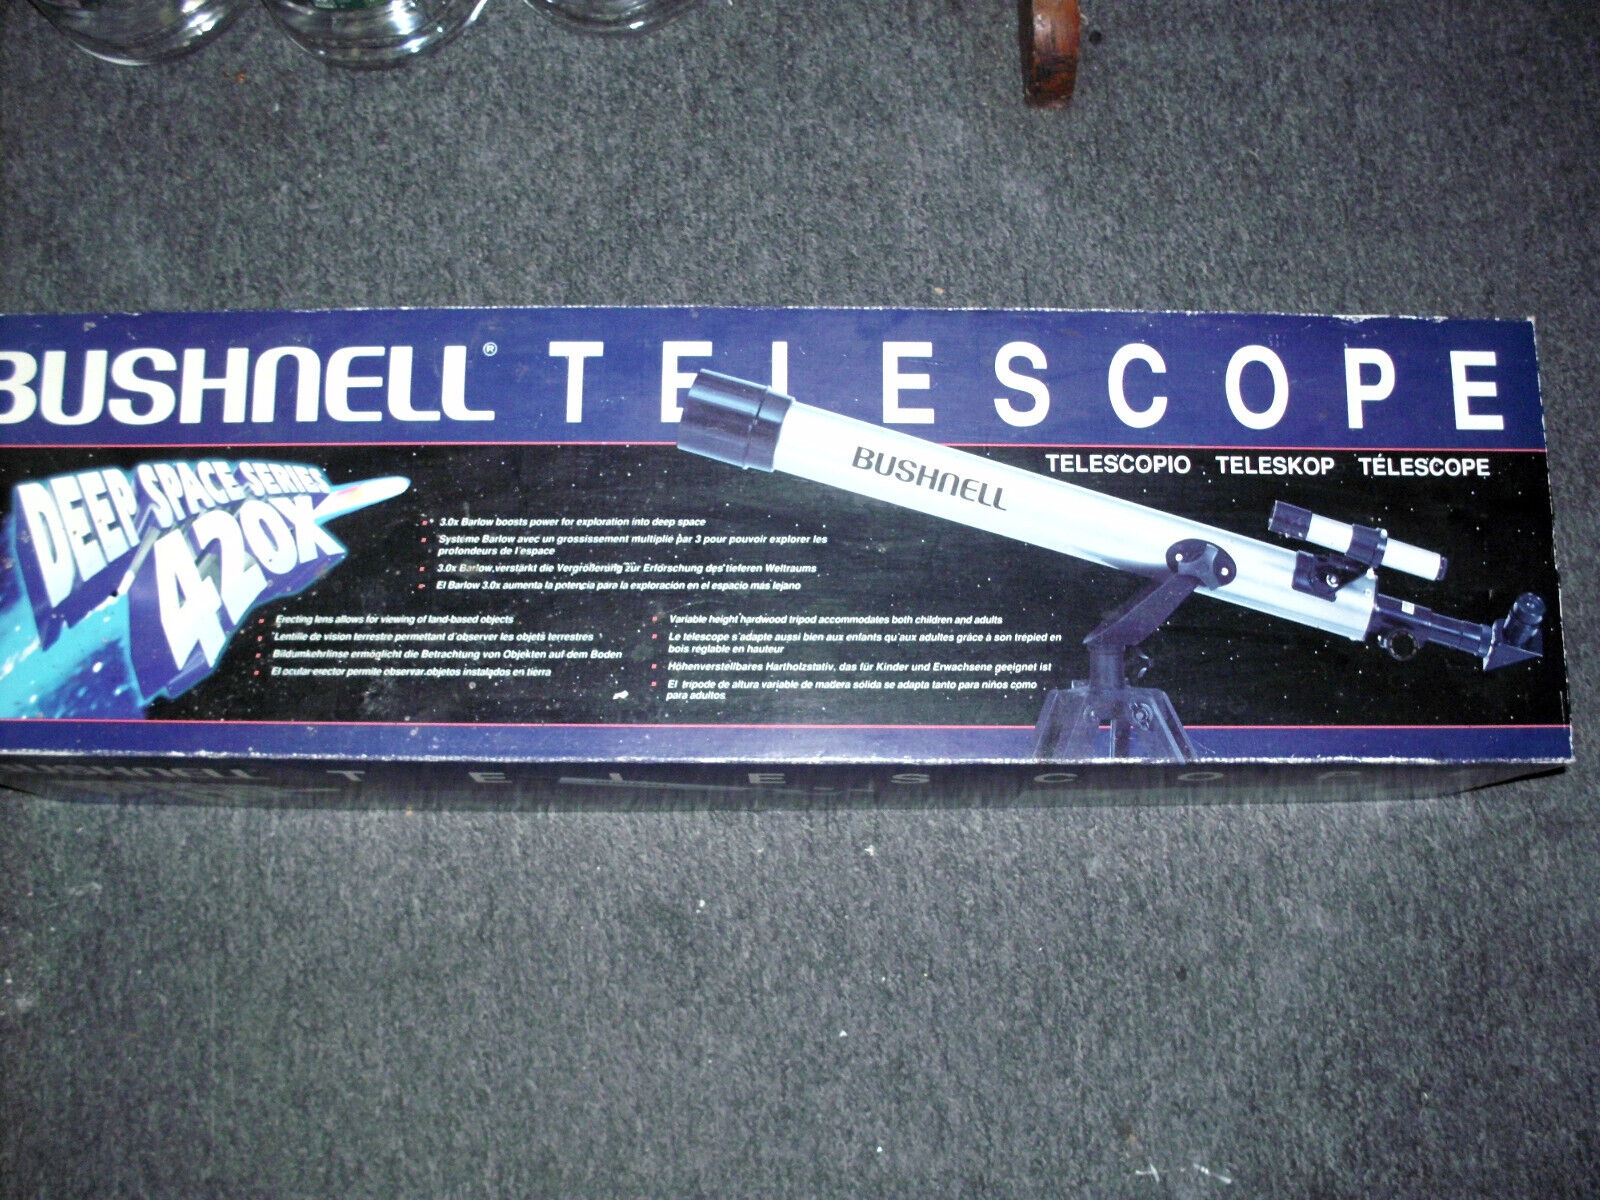 Bushnell Deep Space 420X #78-9512 60mm Refractor Telescope w/Hardwood Tripod New